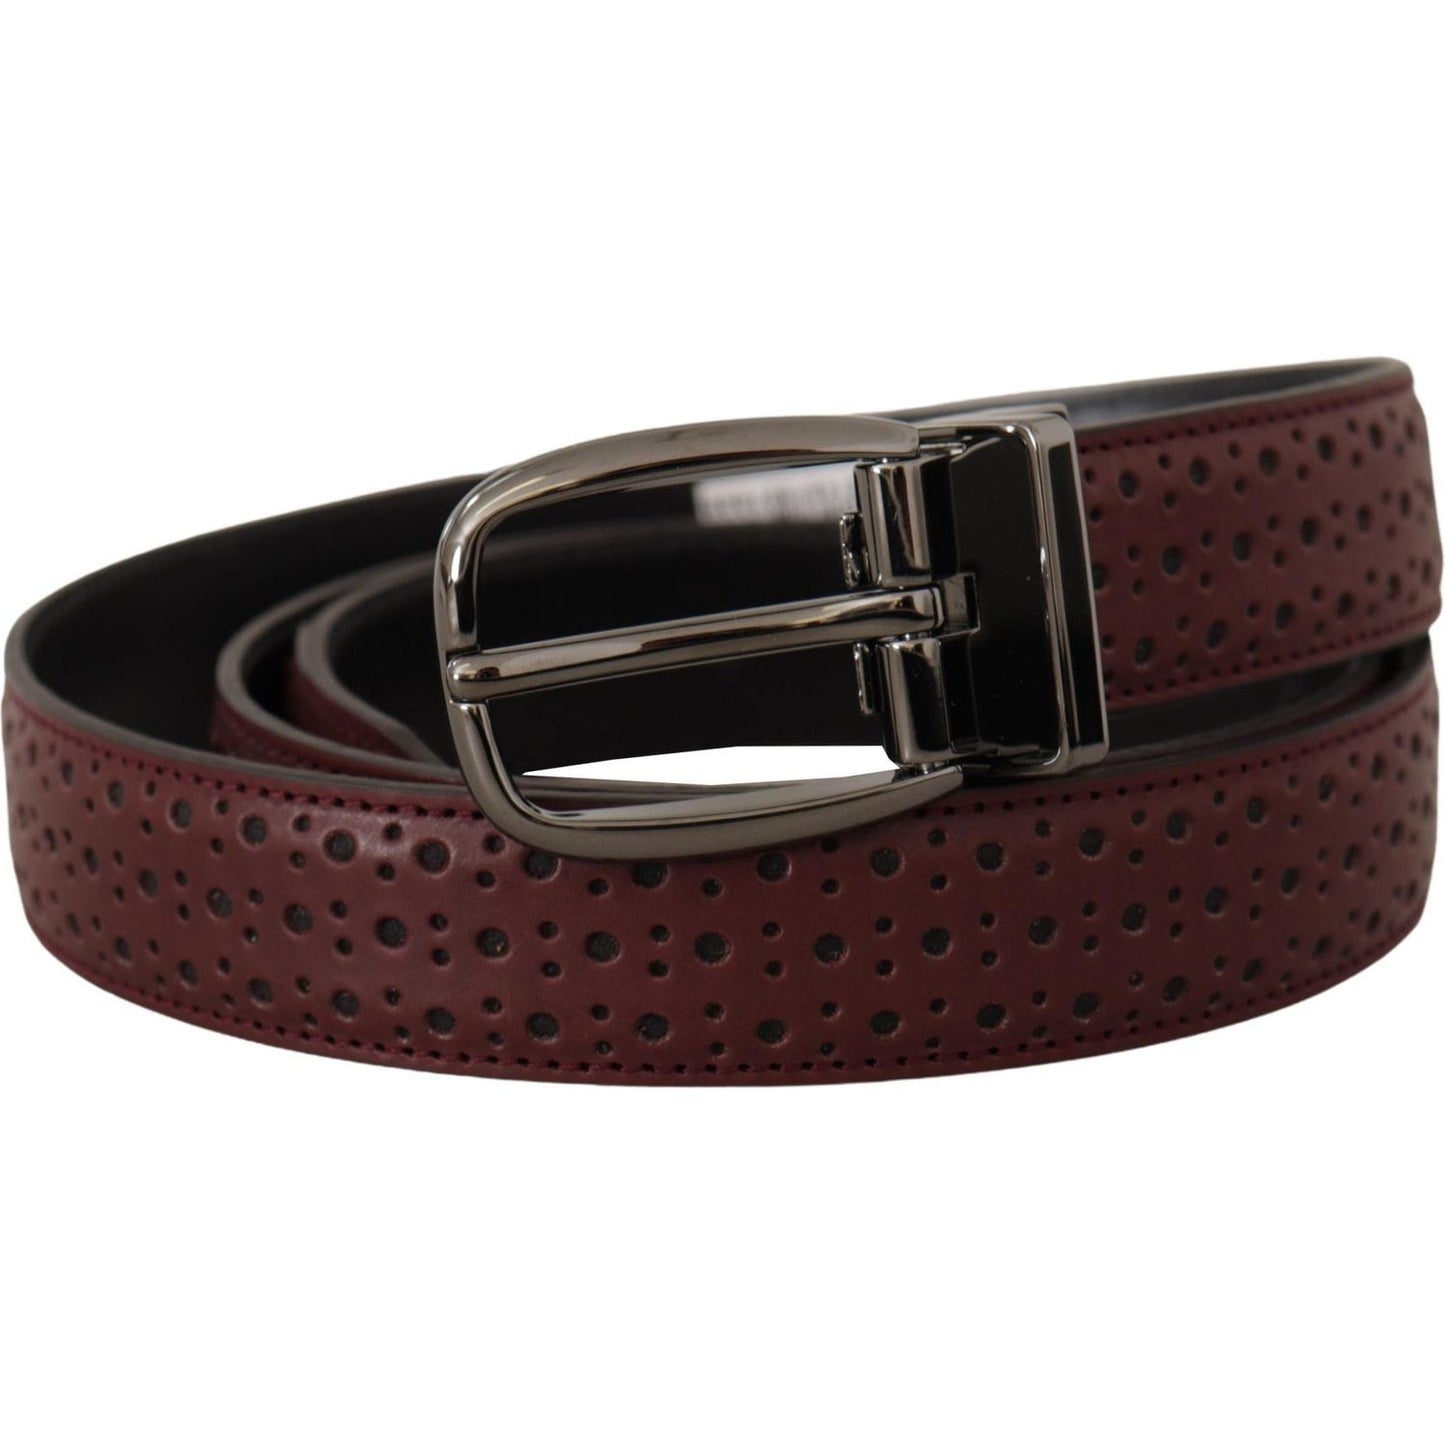 Dolce & Gabbana Elegant Leather Belt with Metal Buckle brown-perforated-leather-metal-buckle-belt